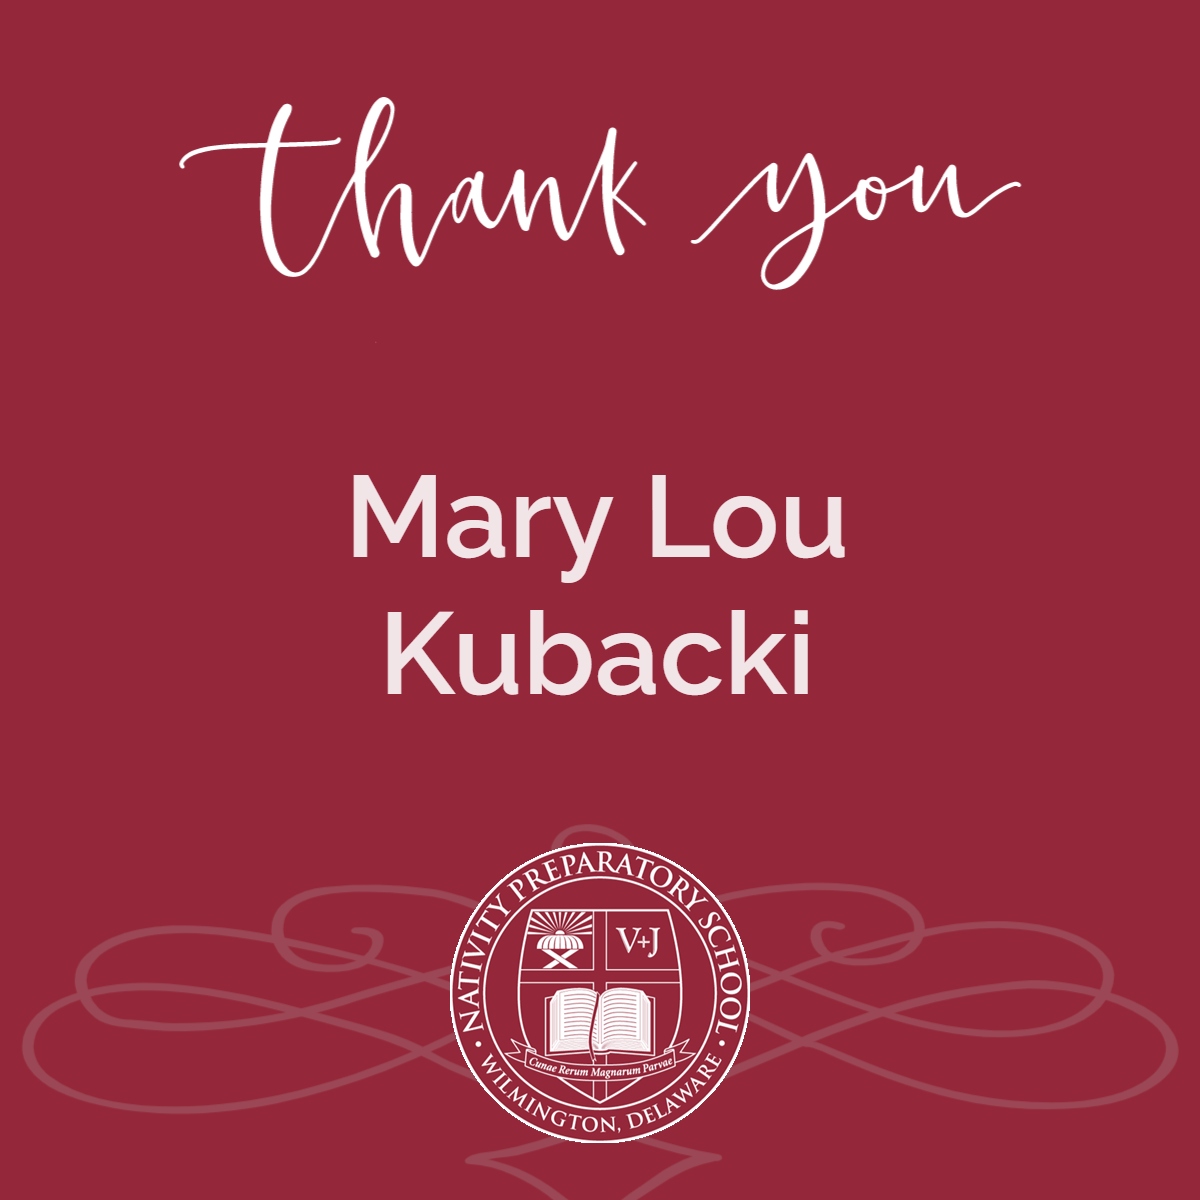 Mary Lou Kubacki